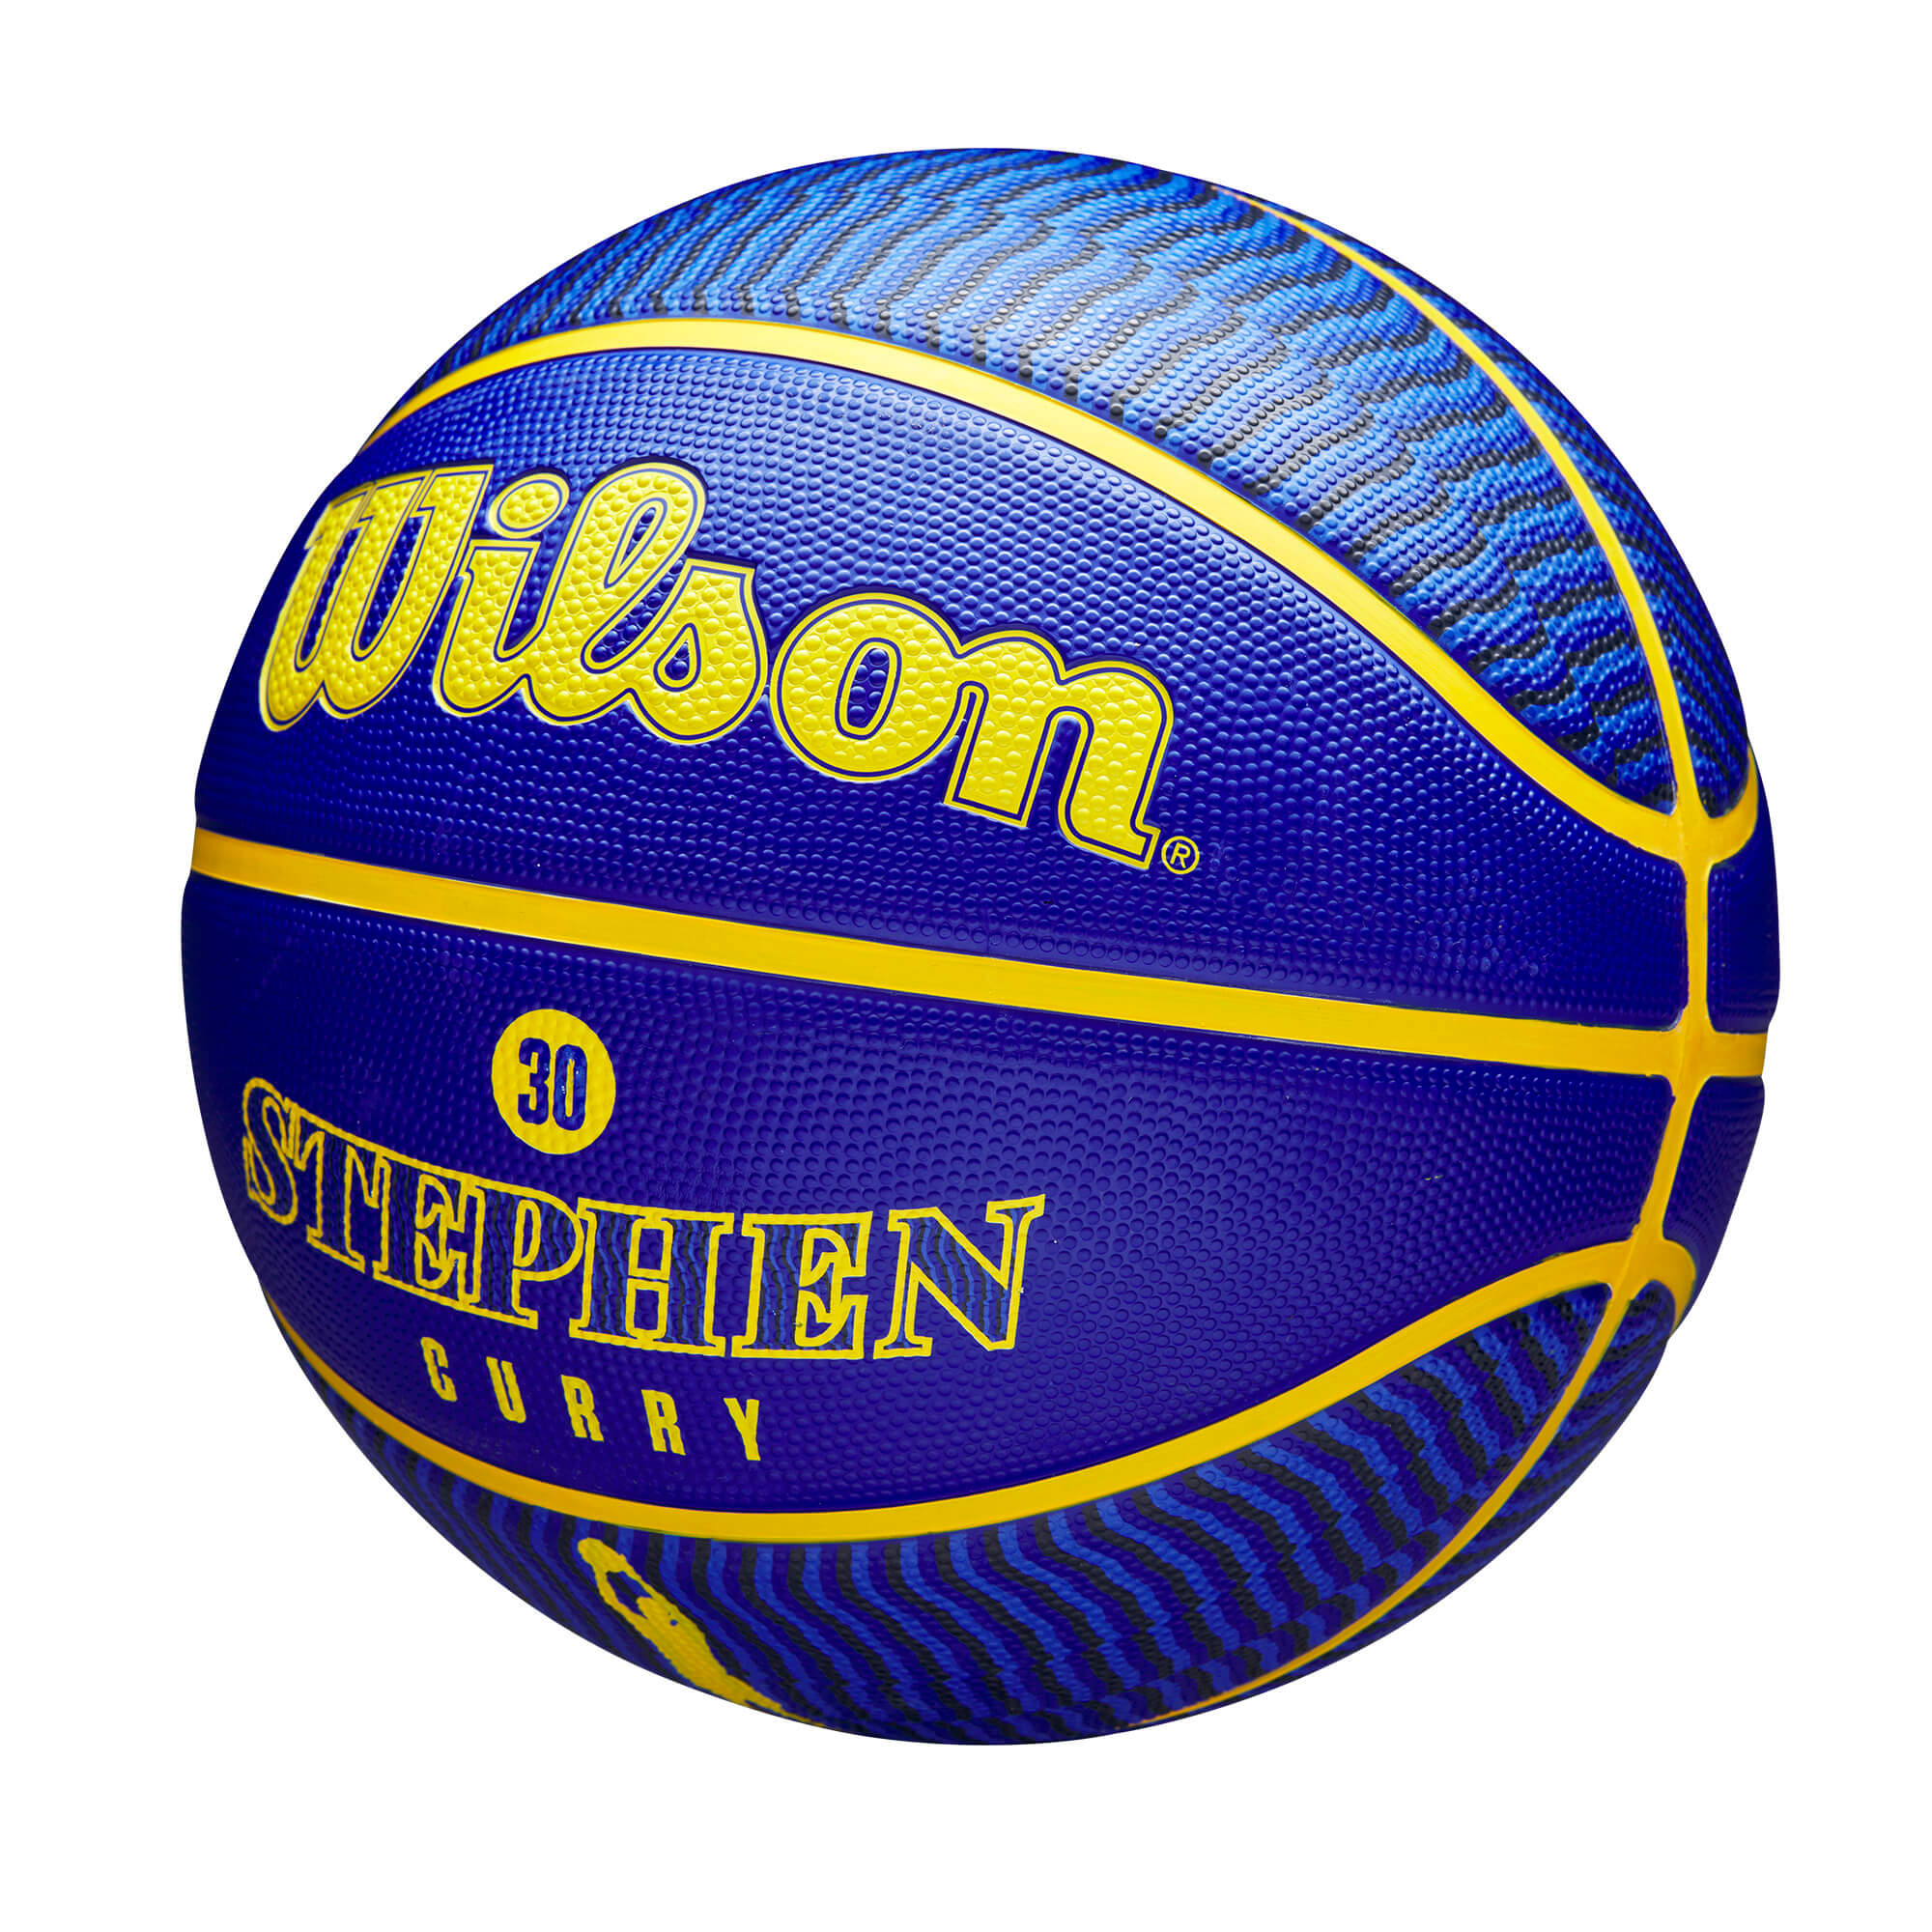 Ballons de basket NBA Player Stephen Curry